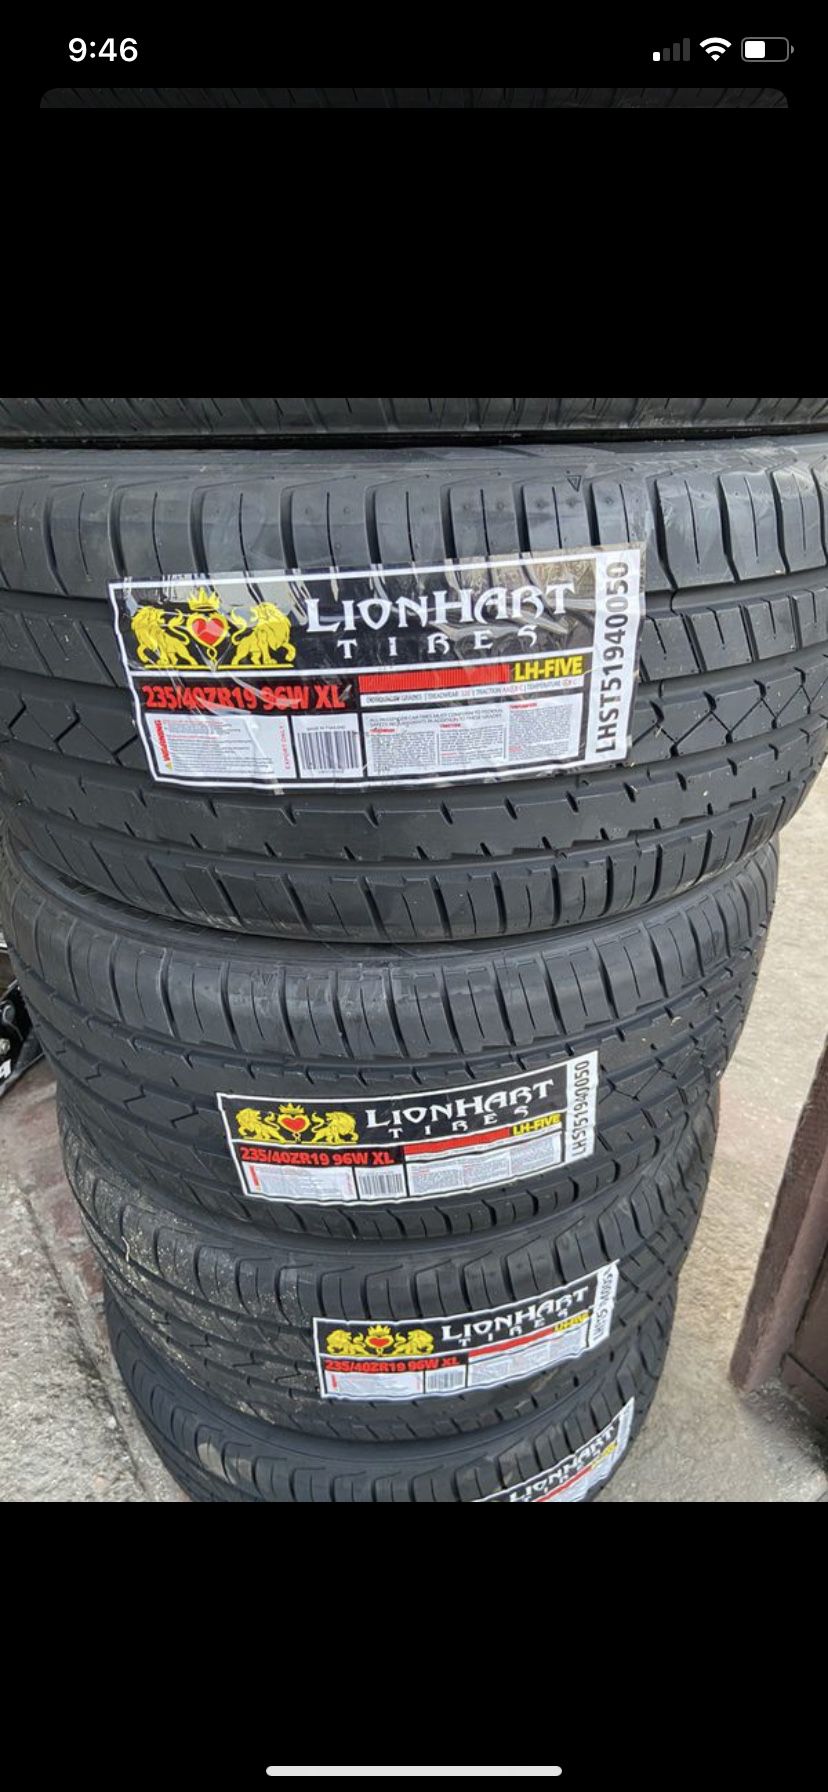 Lionharts 235/40ZR19 $79 each new tire 235/40R/19 all season sport tires 235/40/19 235/40ZR/19